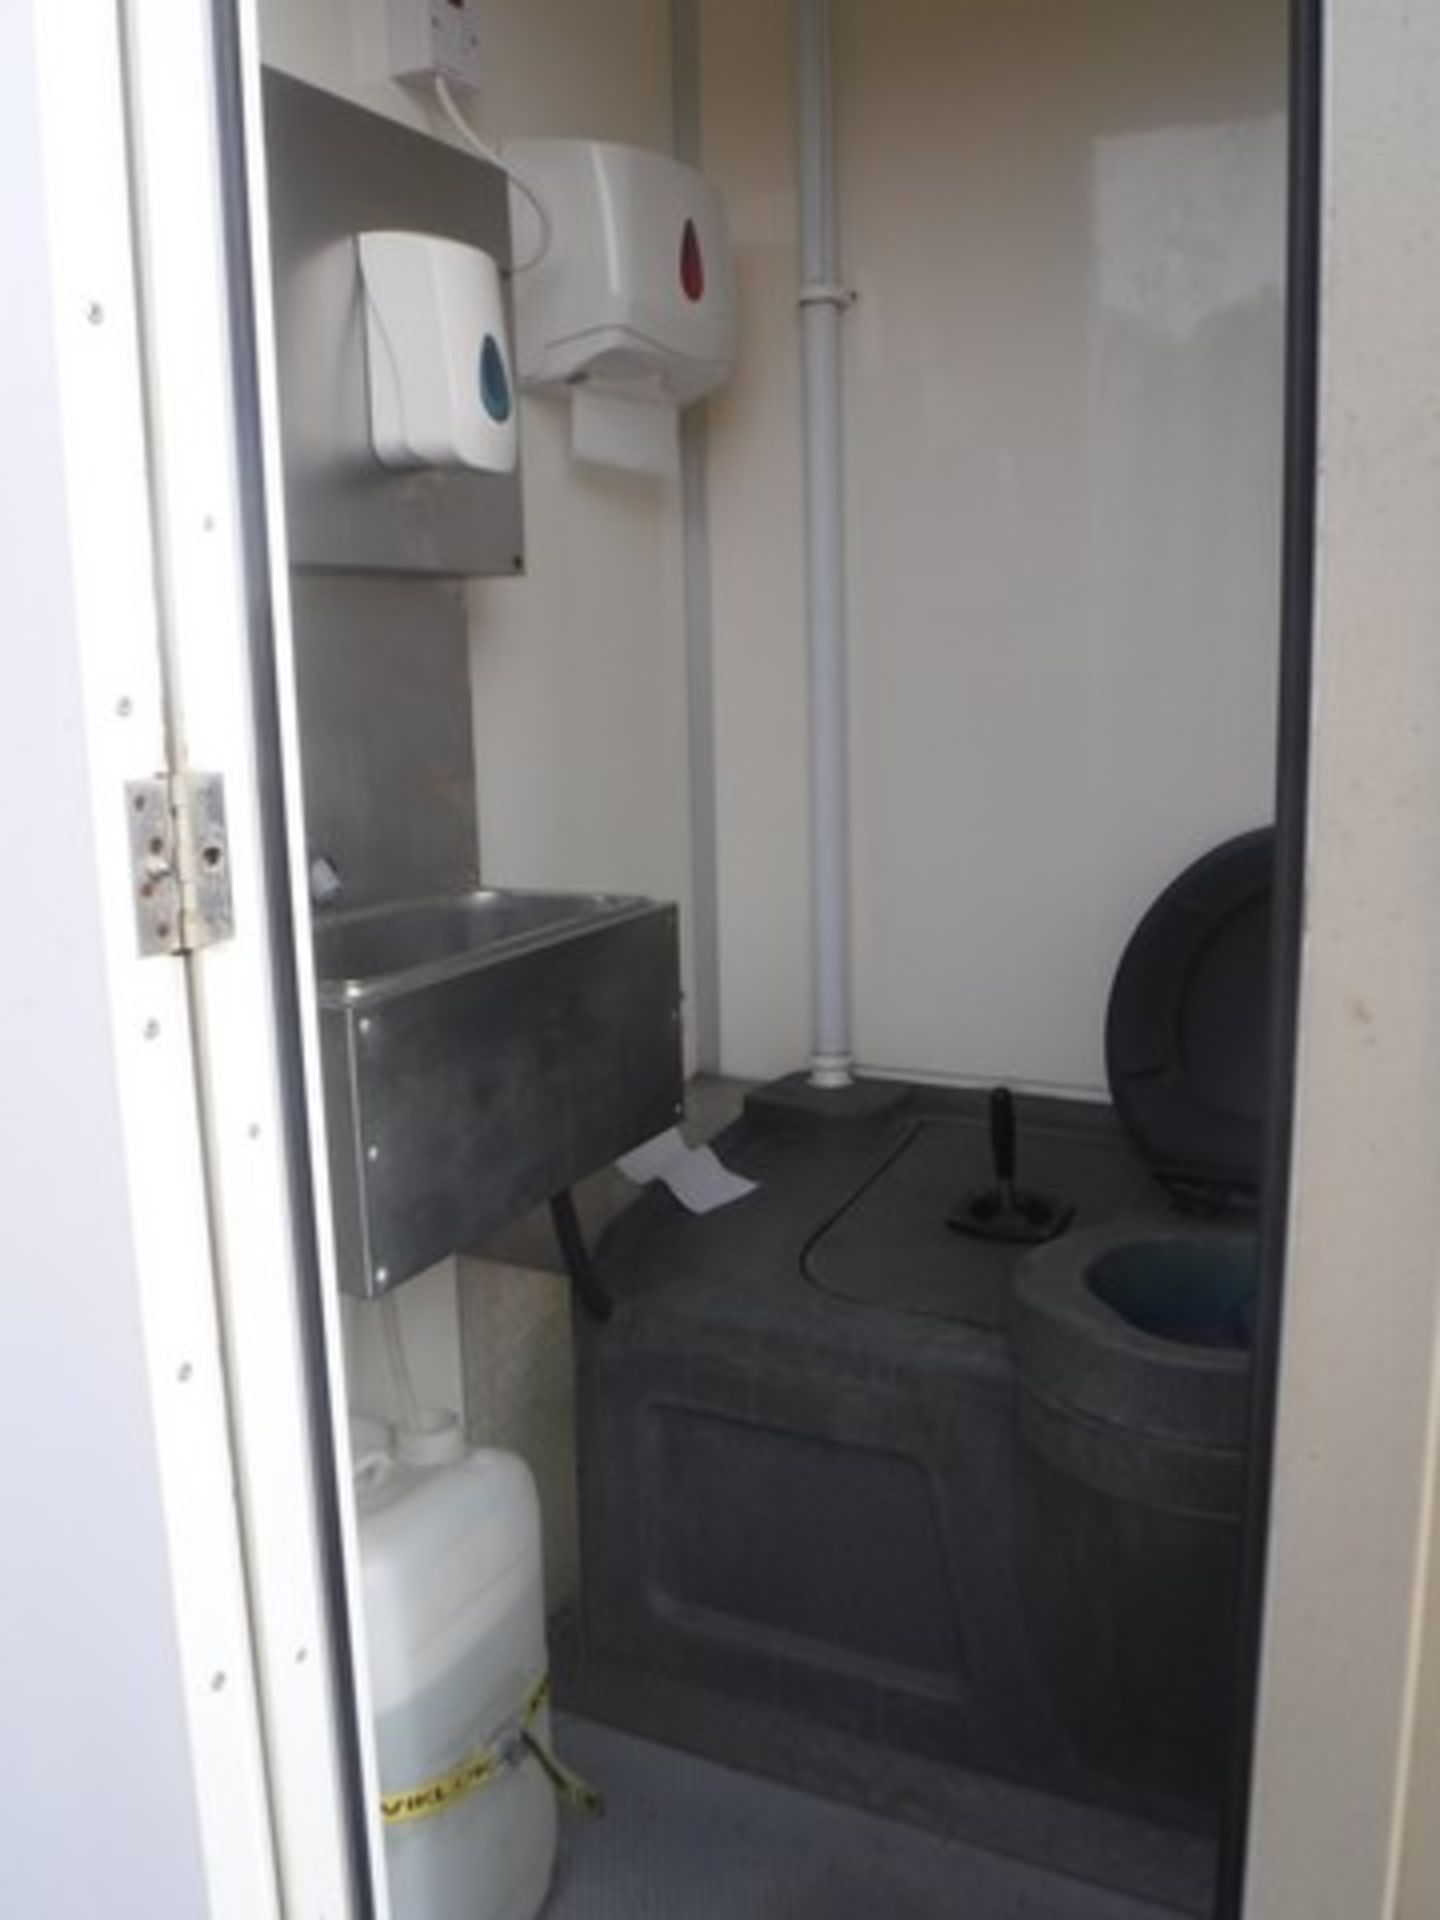 12 x 8 TOWABLE welfare cabin. Onboard generator, kitchen facilities, toilet & drying room. S/N SSM10 - Image 3 of 22